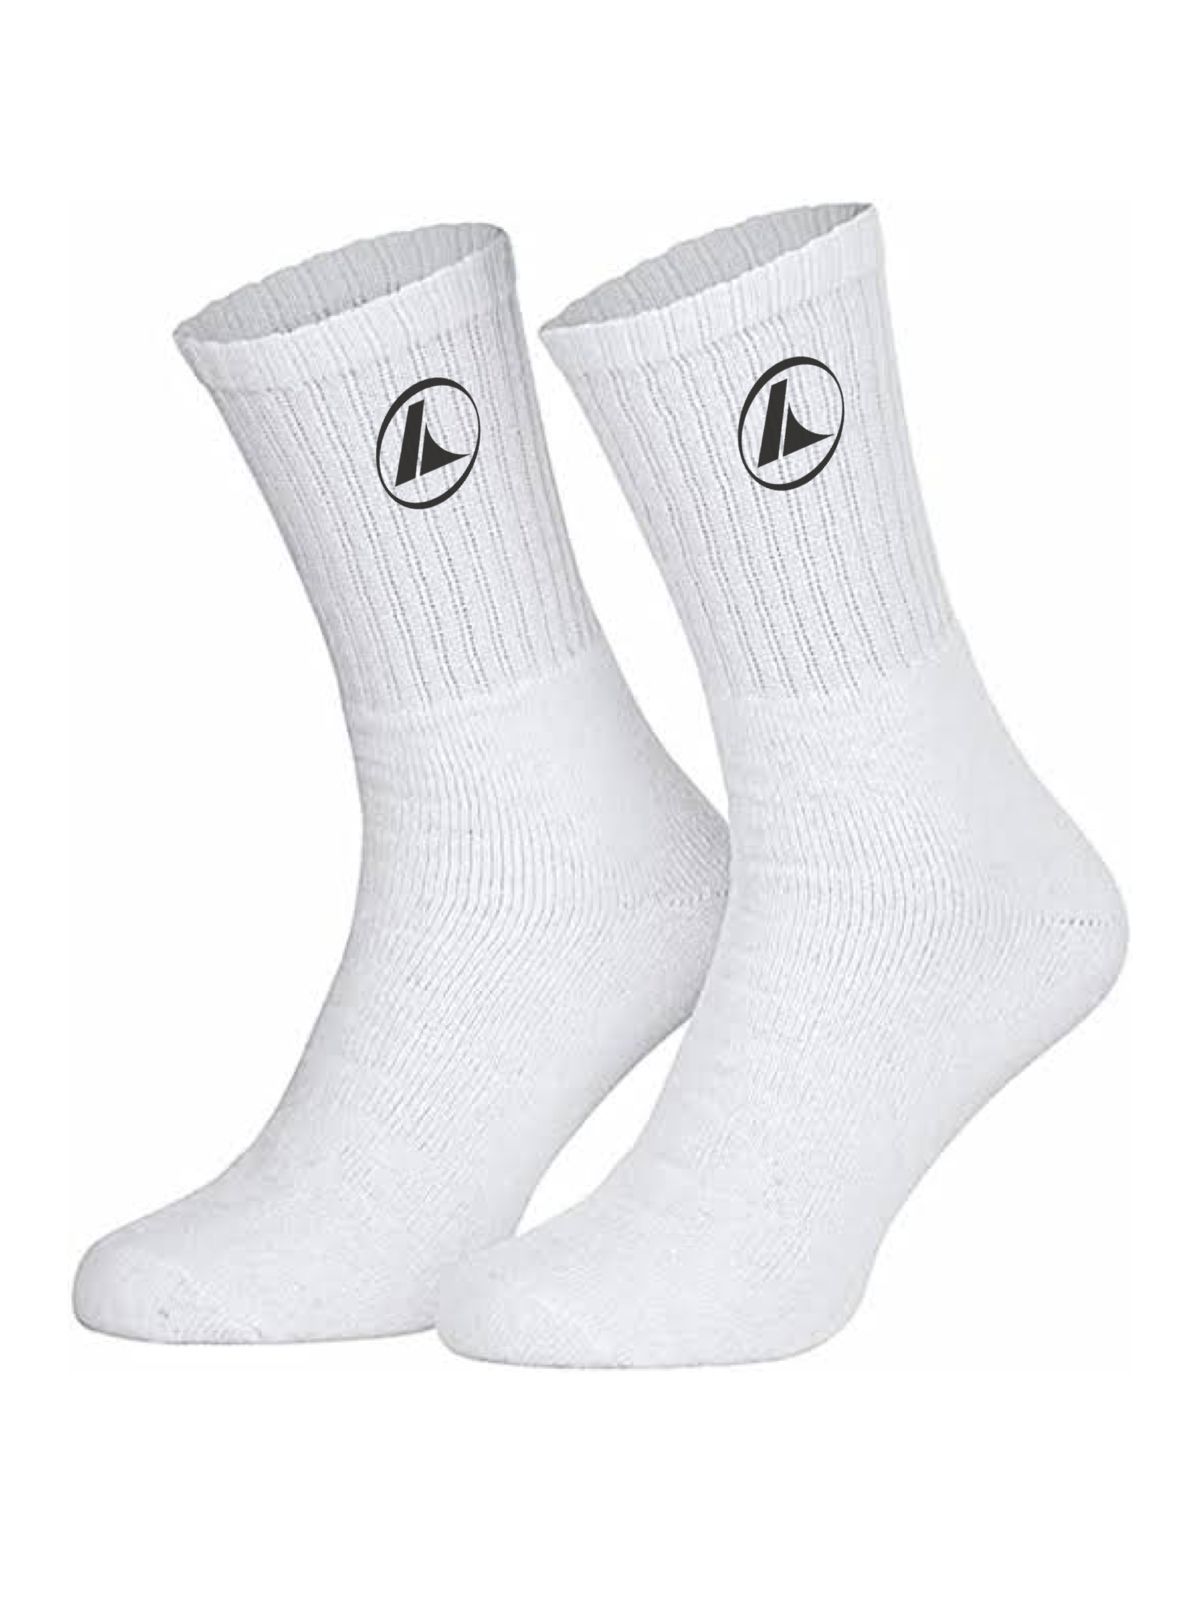 Pro Kennex Men's Tennis Socks